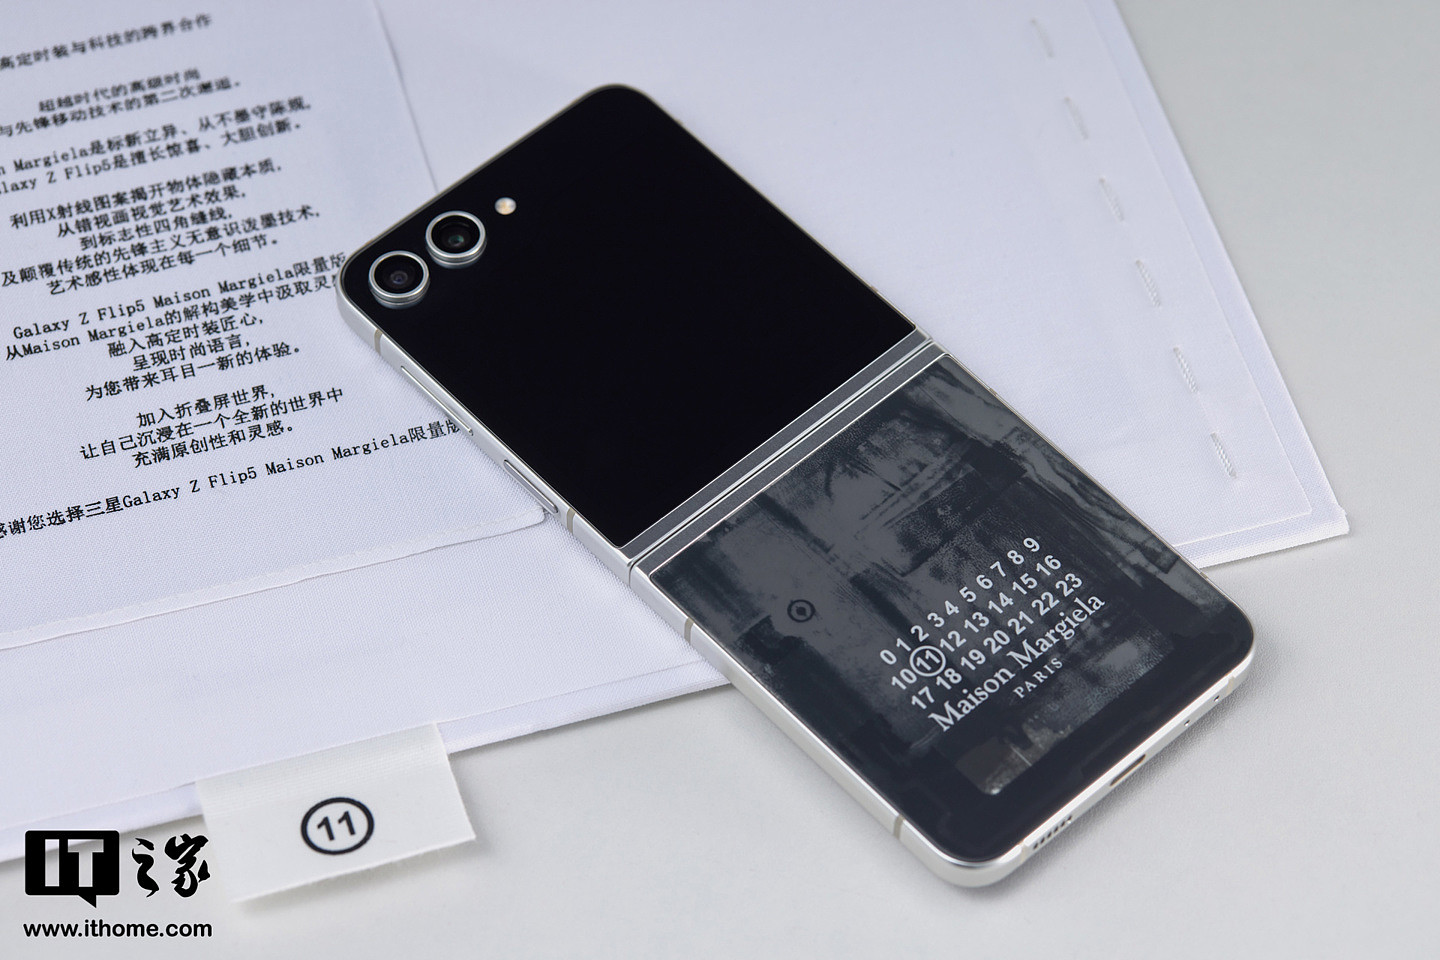 【IT之家开箱】数字艺术先锋：三星 Galaxy Z Flip5 Maison Margiela 限量版手机图赏 - 7